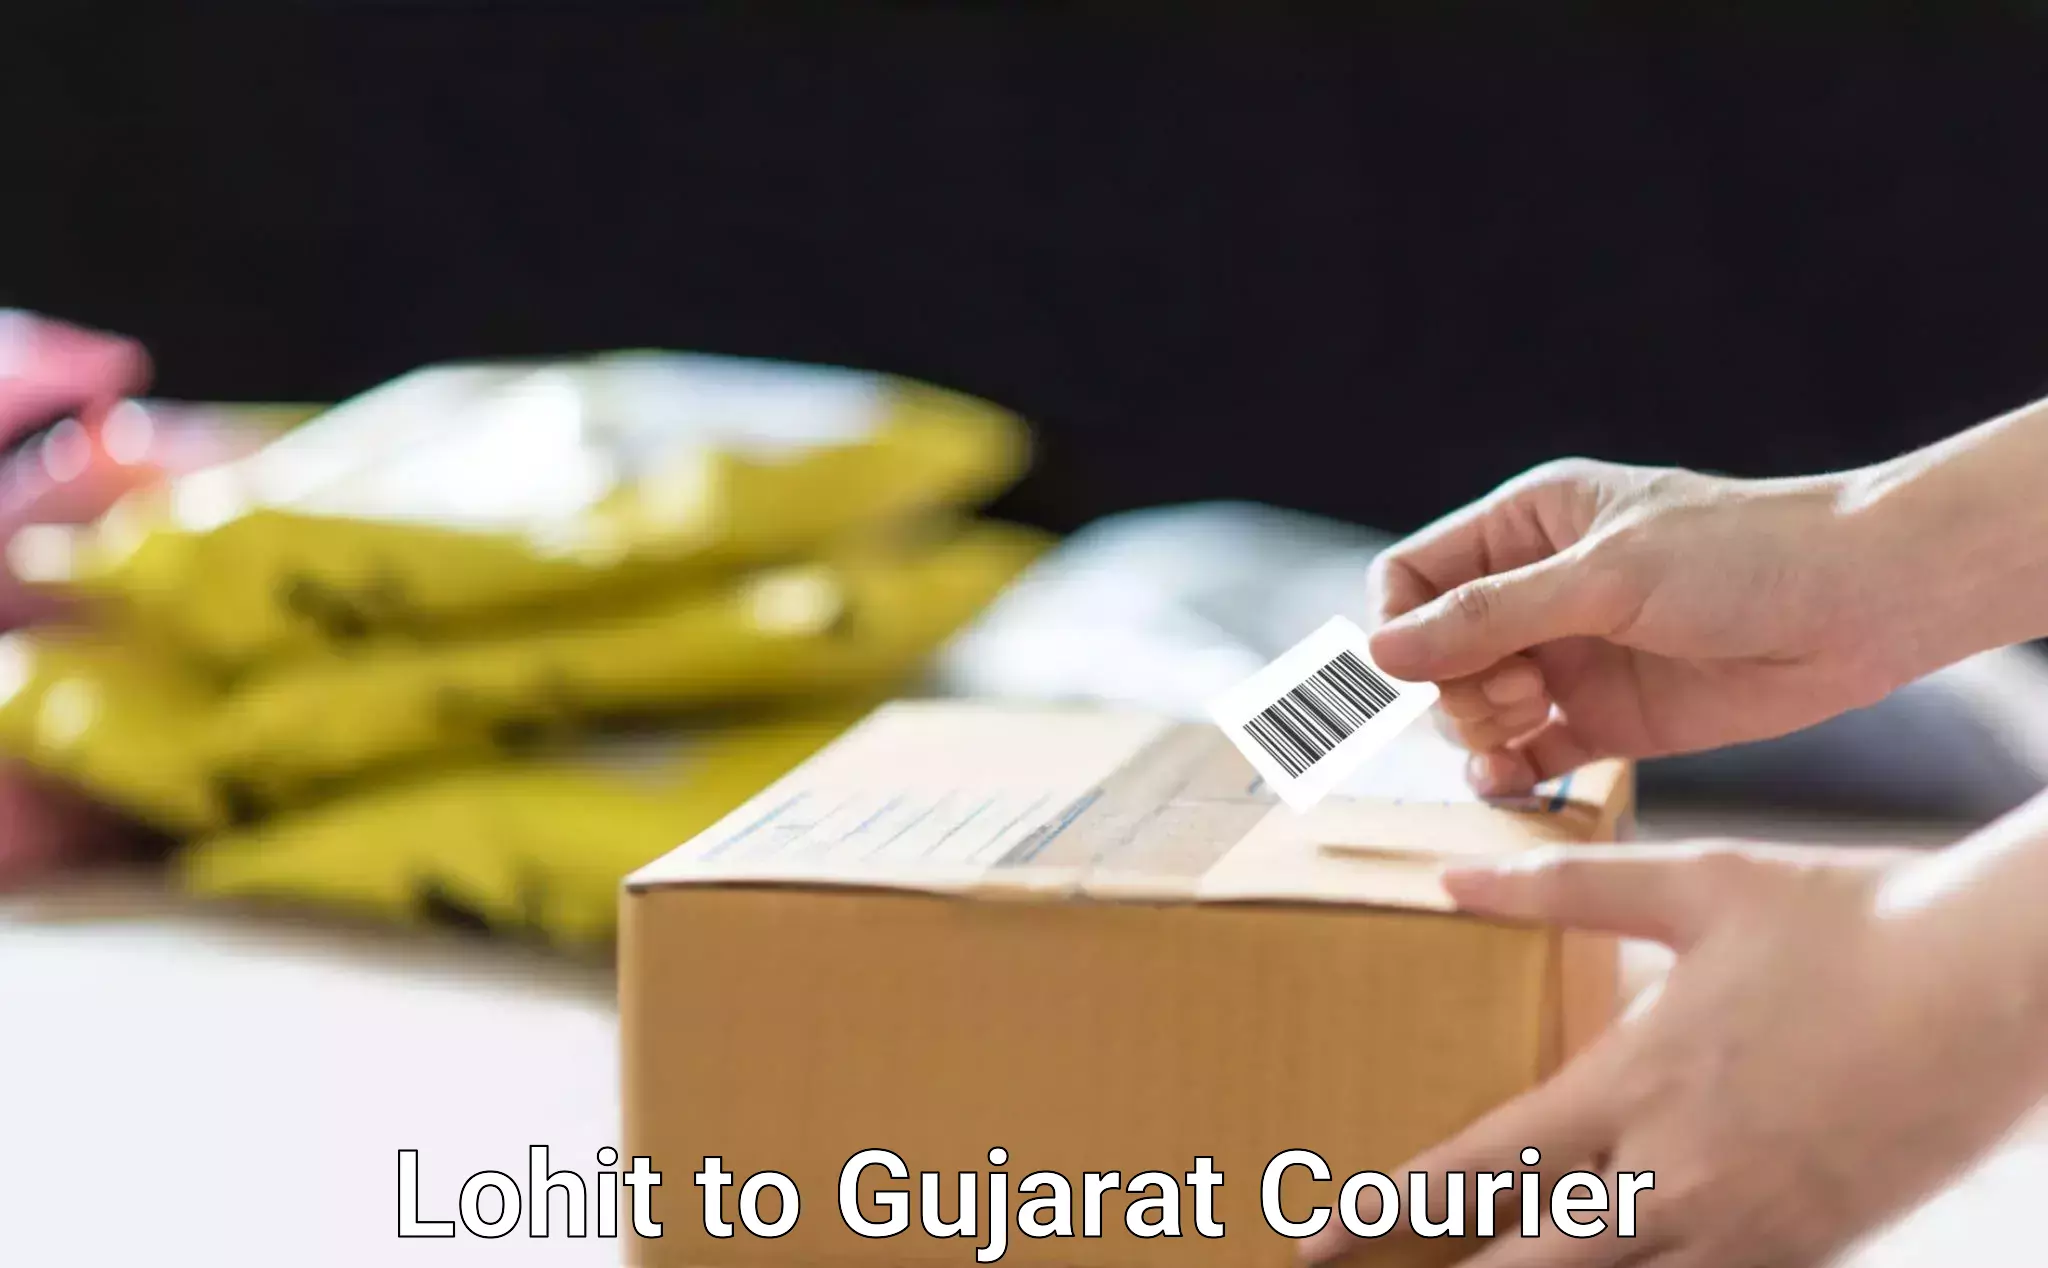 Customer-focused courier Lohit to Madhavpur